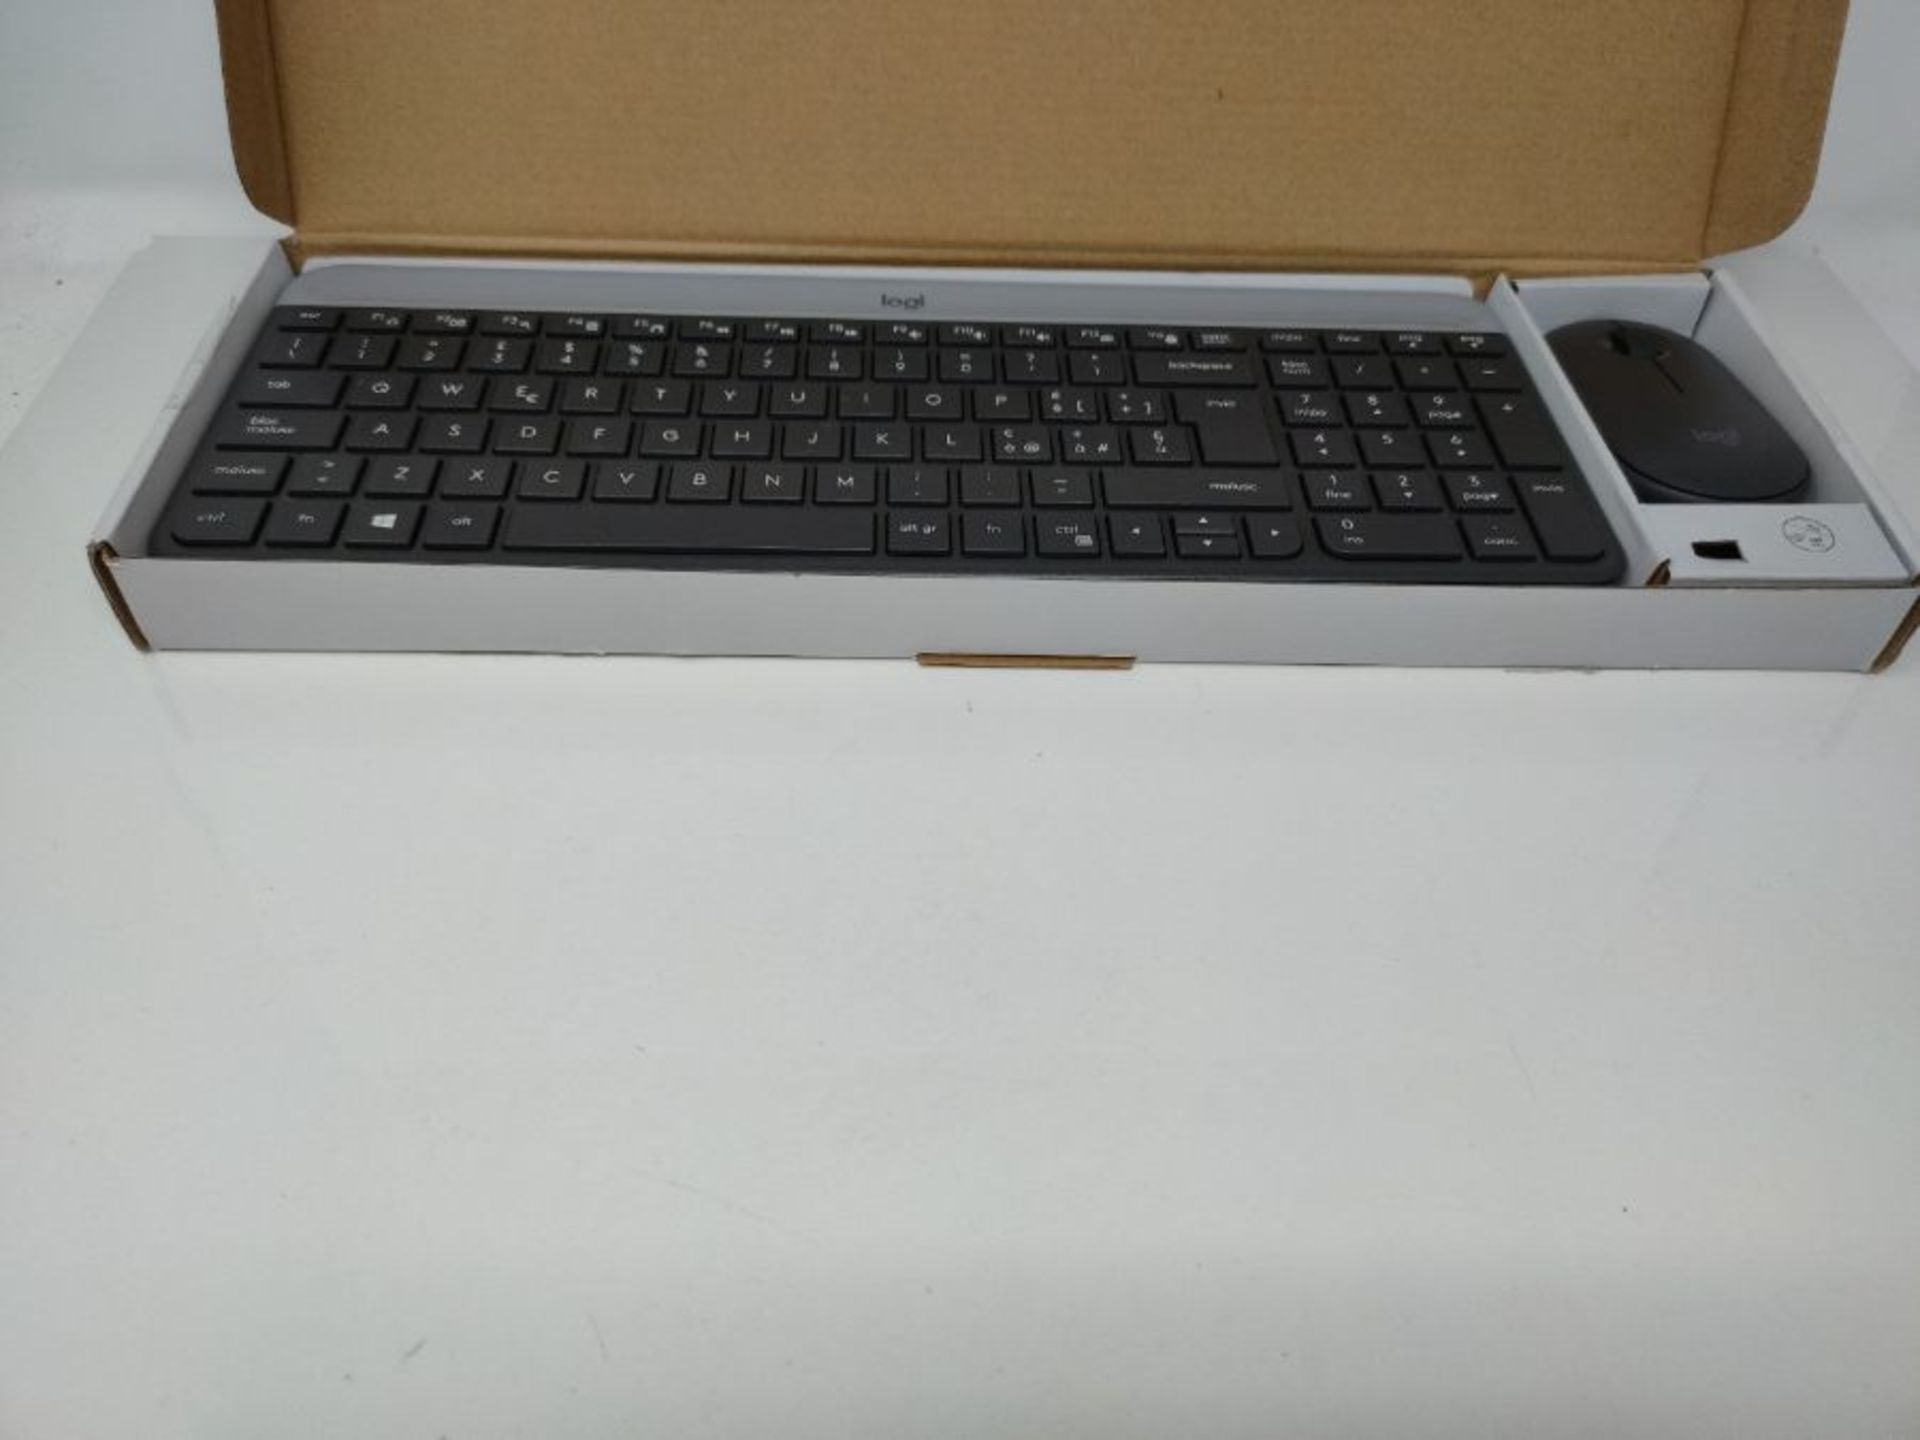 Logitech MK470 Slim Wireless Keyboard & Mouse Combo, QWERTZ German Layout - Black - Image 3 of 3